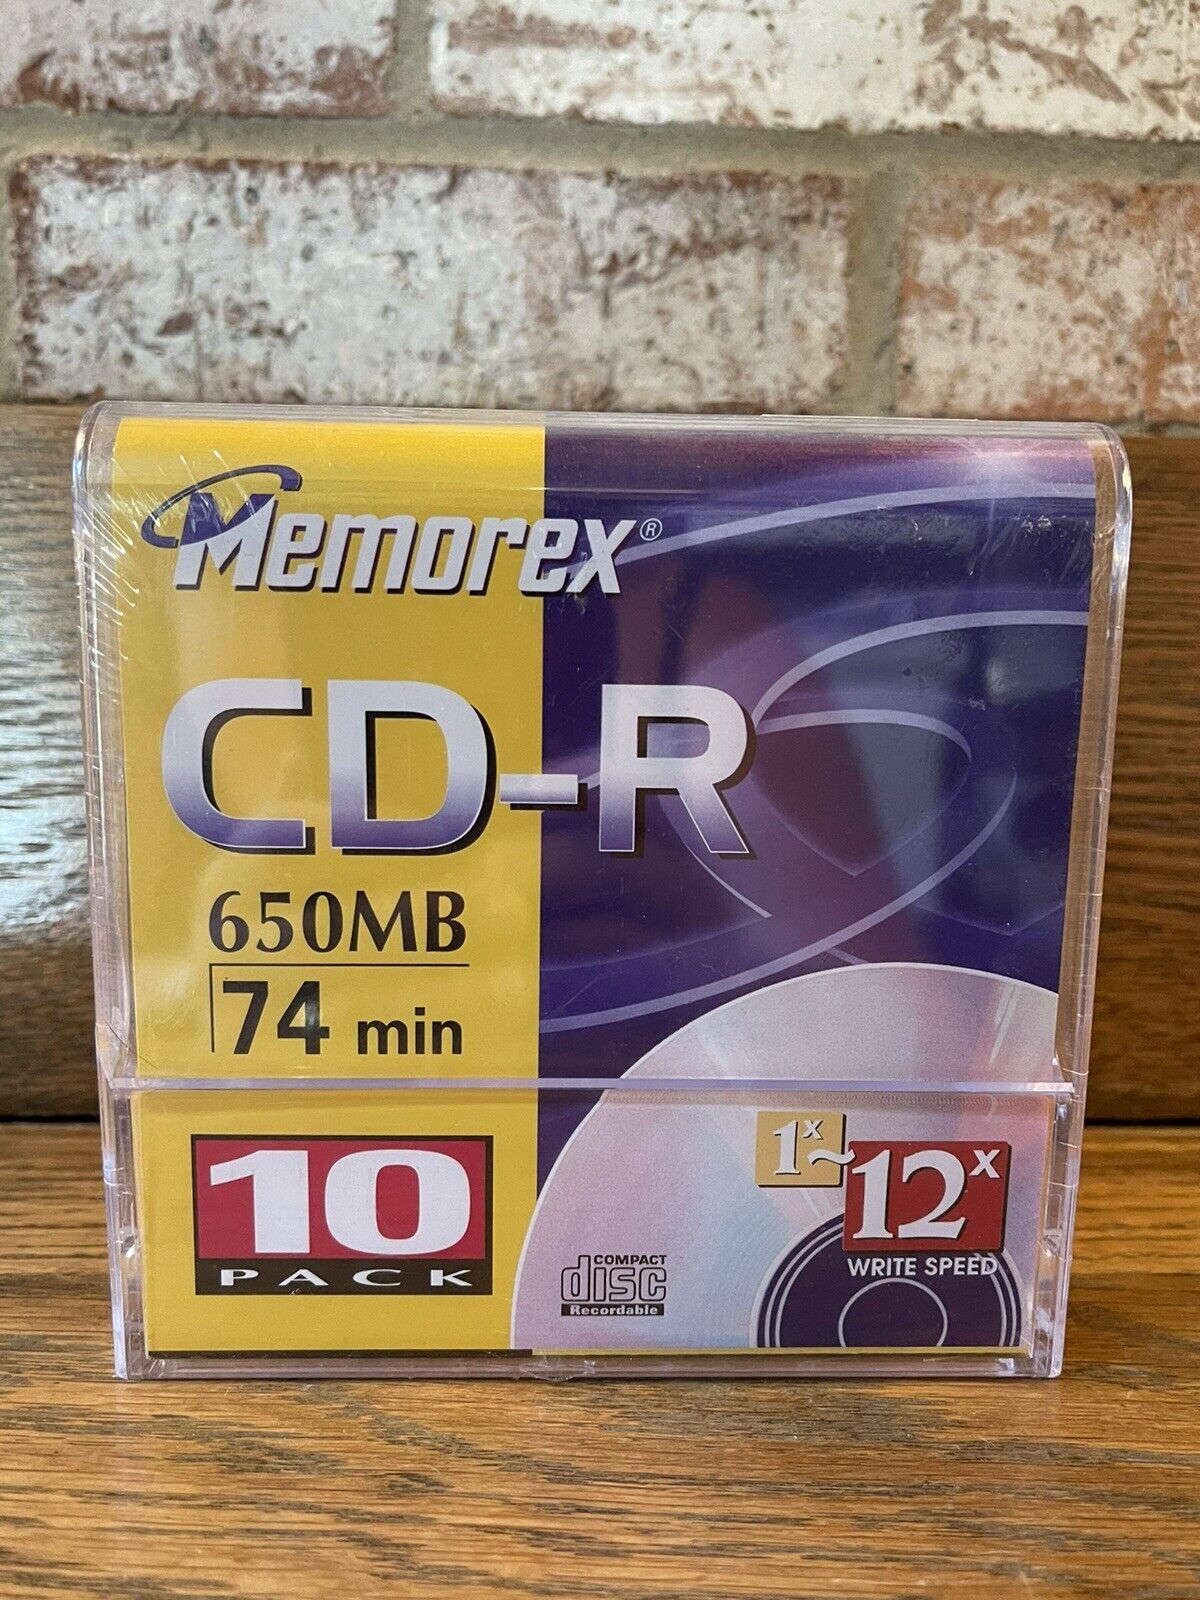 Memorex CD-R 650MB 74 Min NEW Sealed box 10 Pack New Old Stock